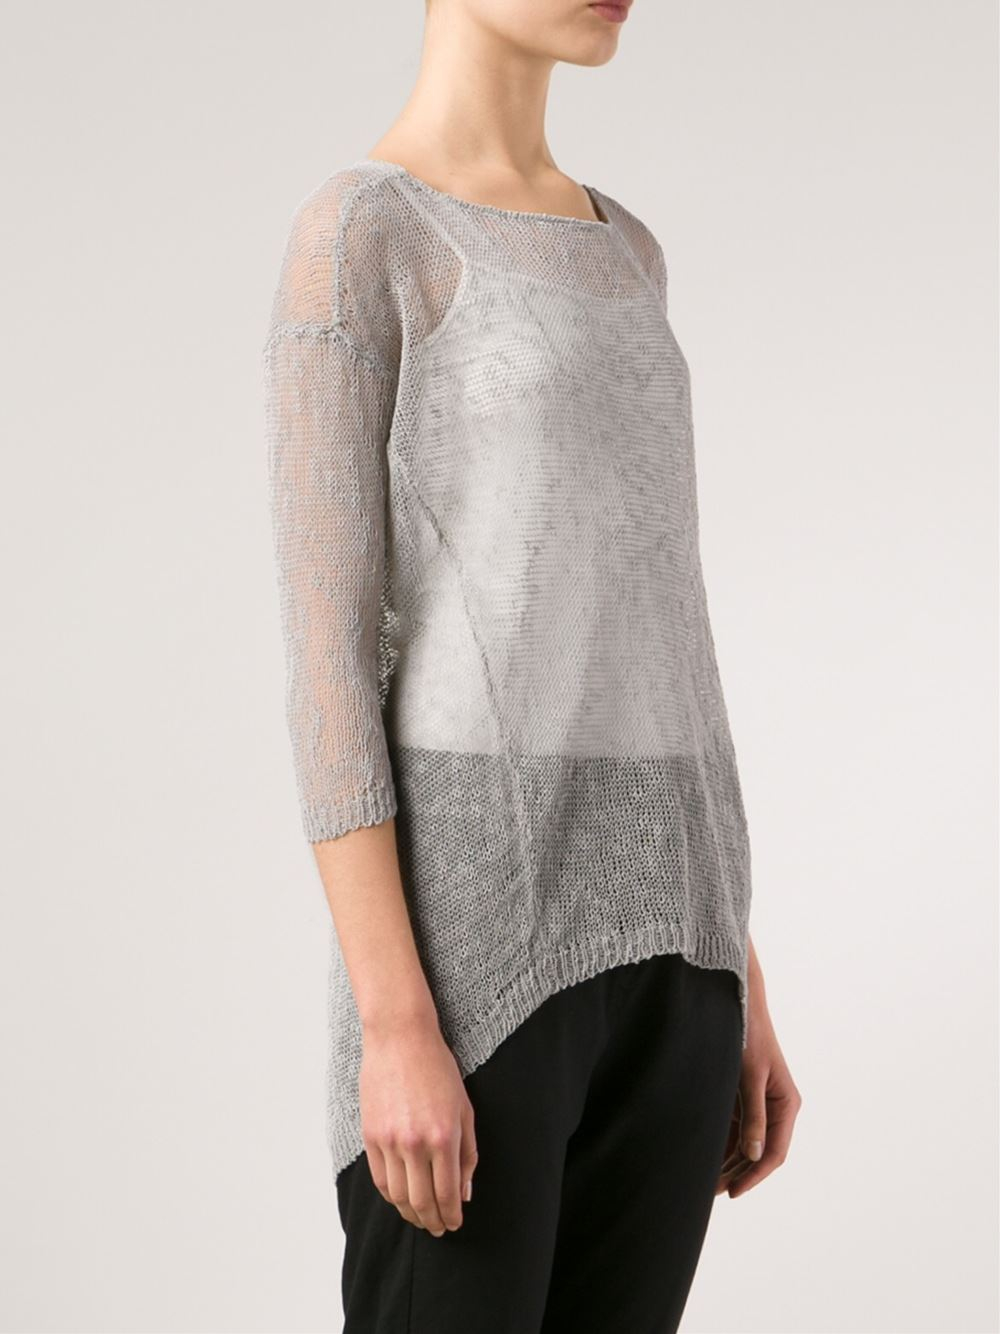 Transit Sheer Sweater in Gray | Lyst